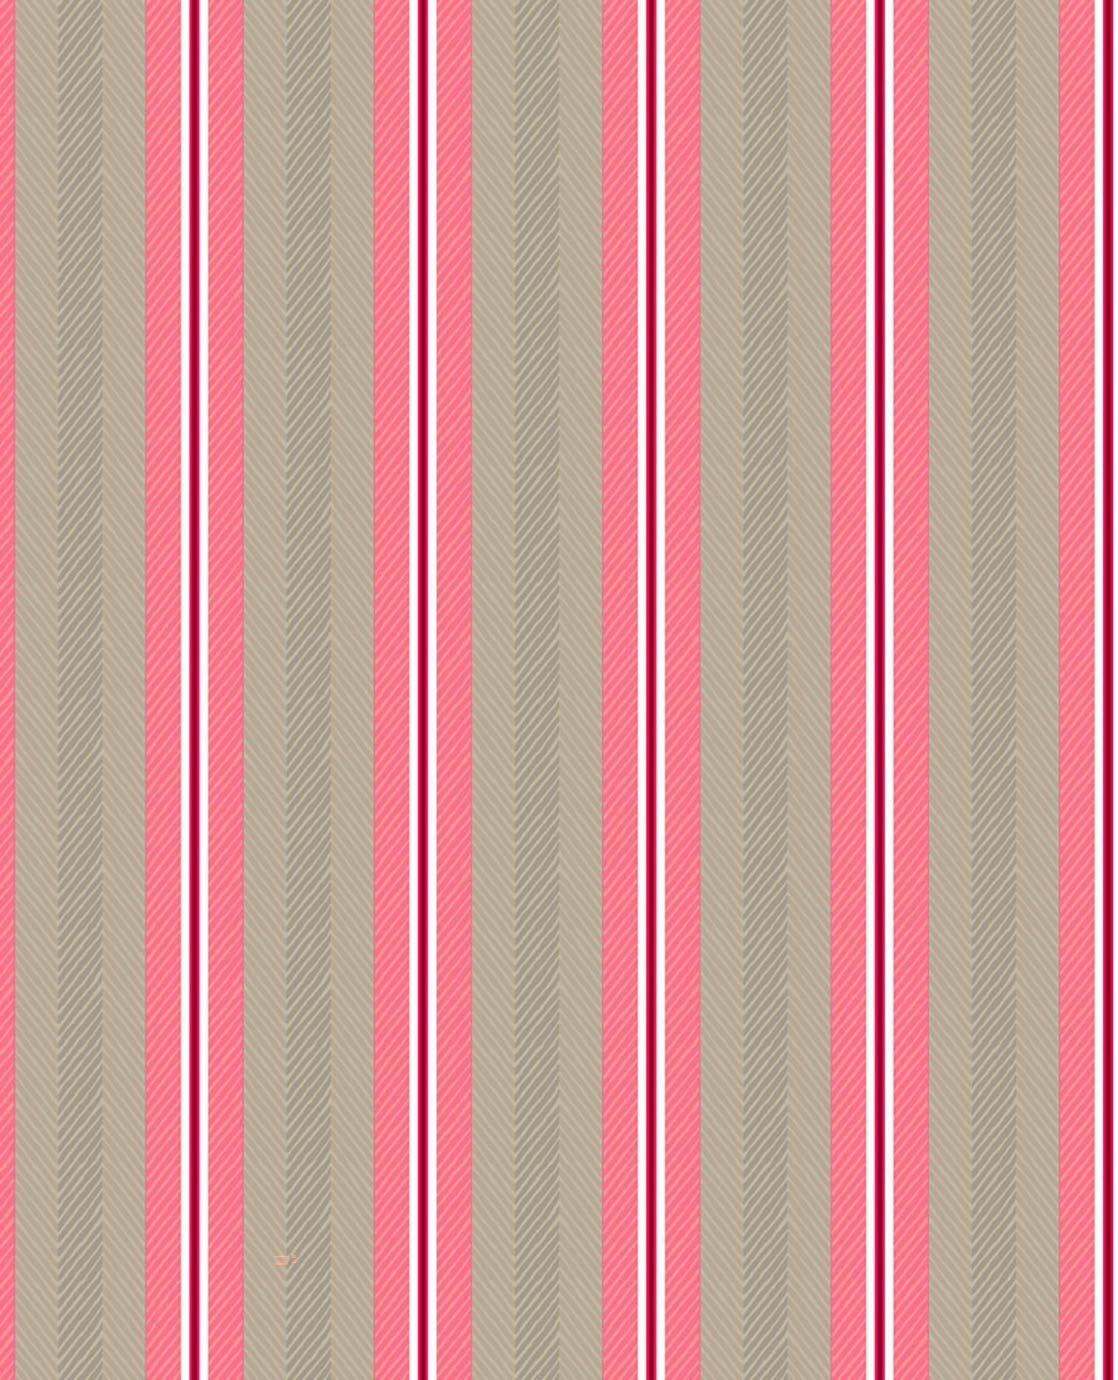 Blurred Lines - Khaki